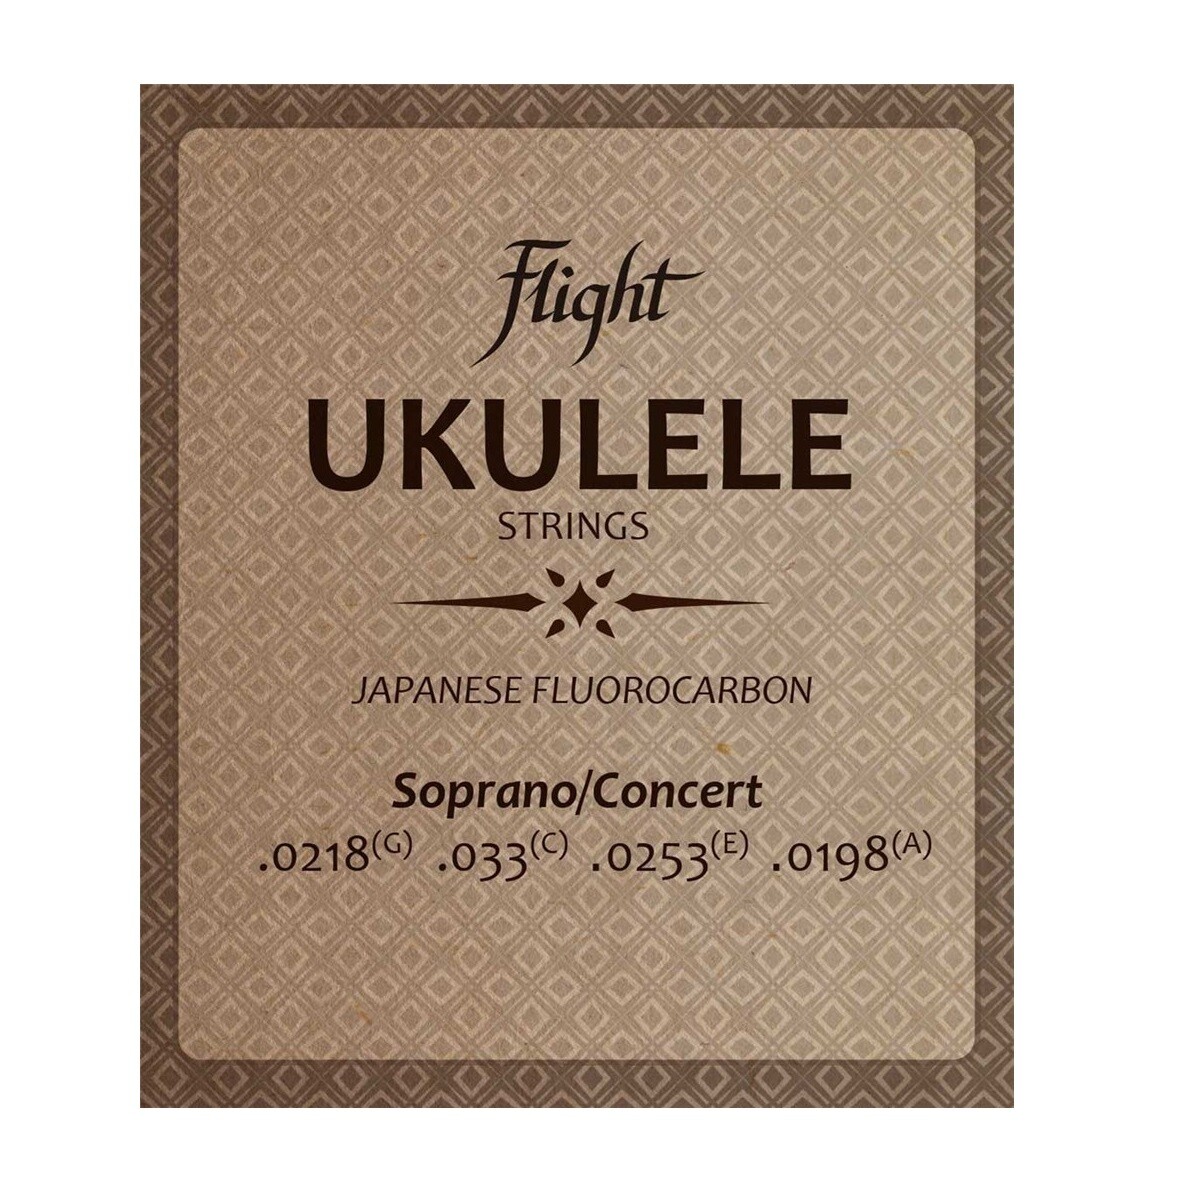 Flight Ukulele Soprano/Concert Strings - Japanese Fluorocarbon